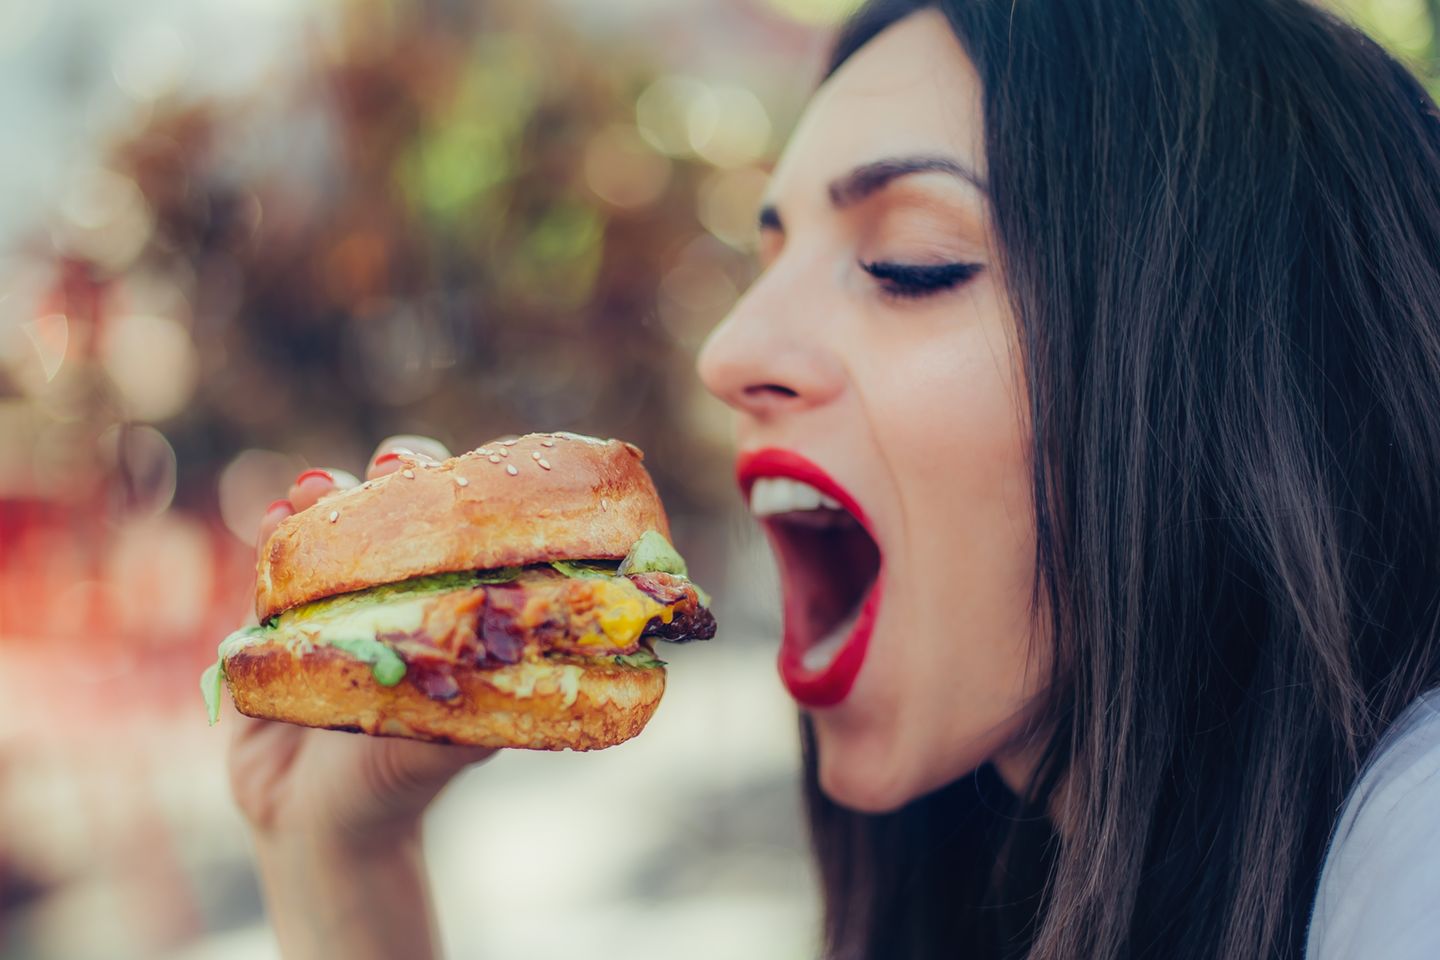 Burger falsch gegessen: Frau beißt in Burger